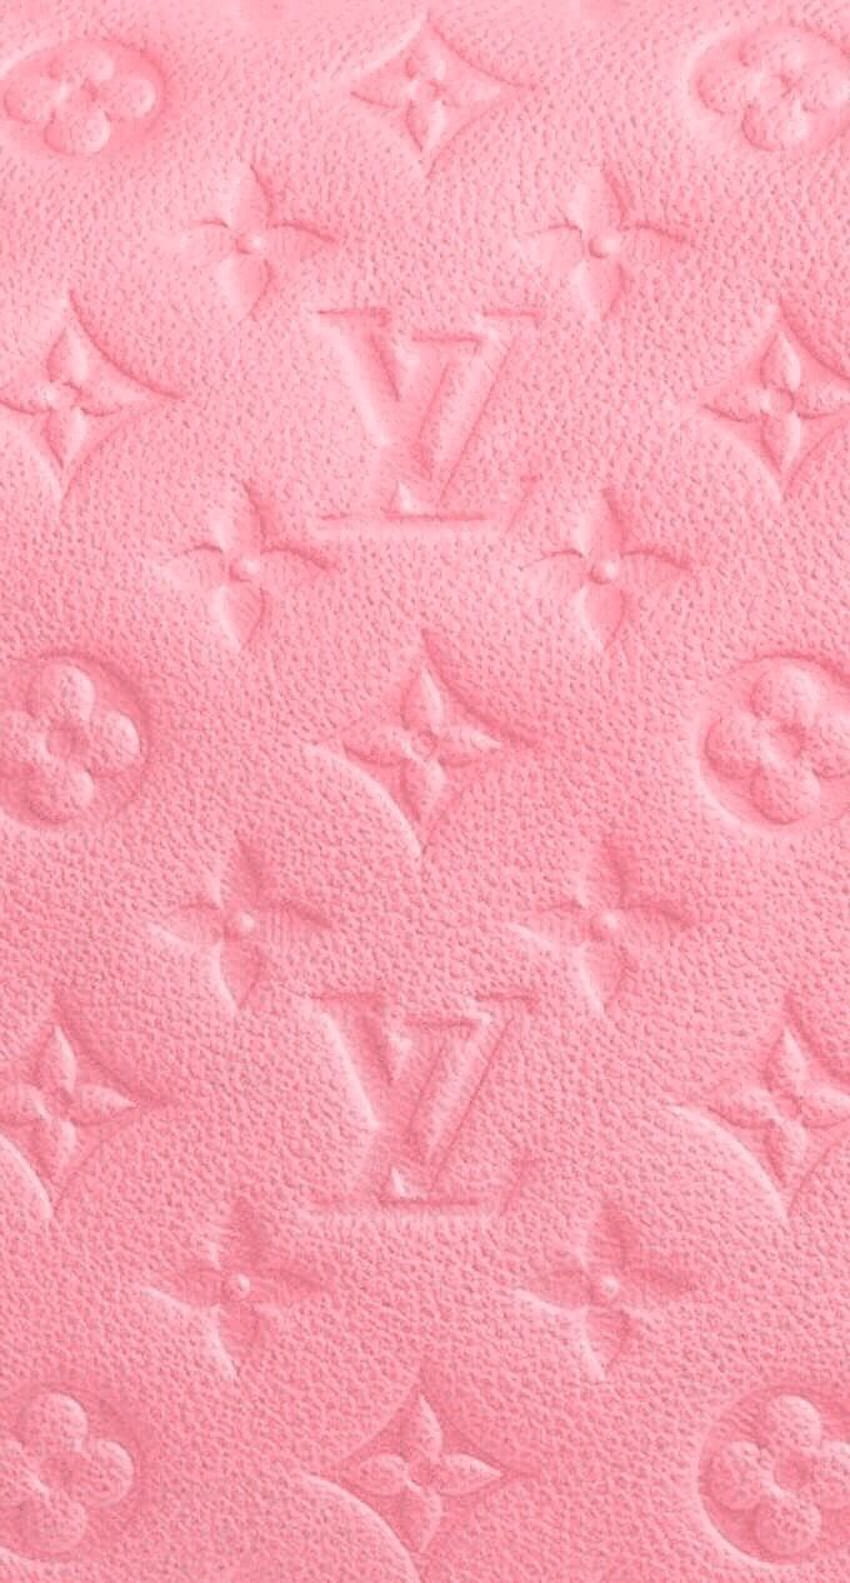 iphone louis vuitton wallpaper pink